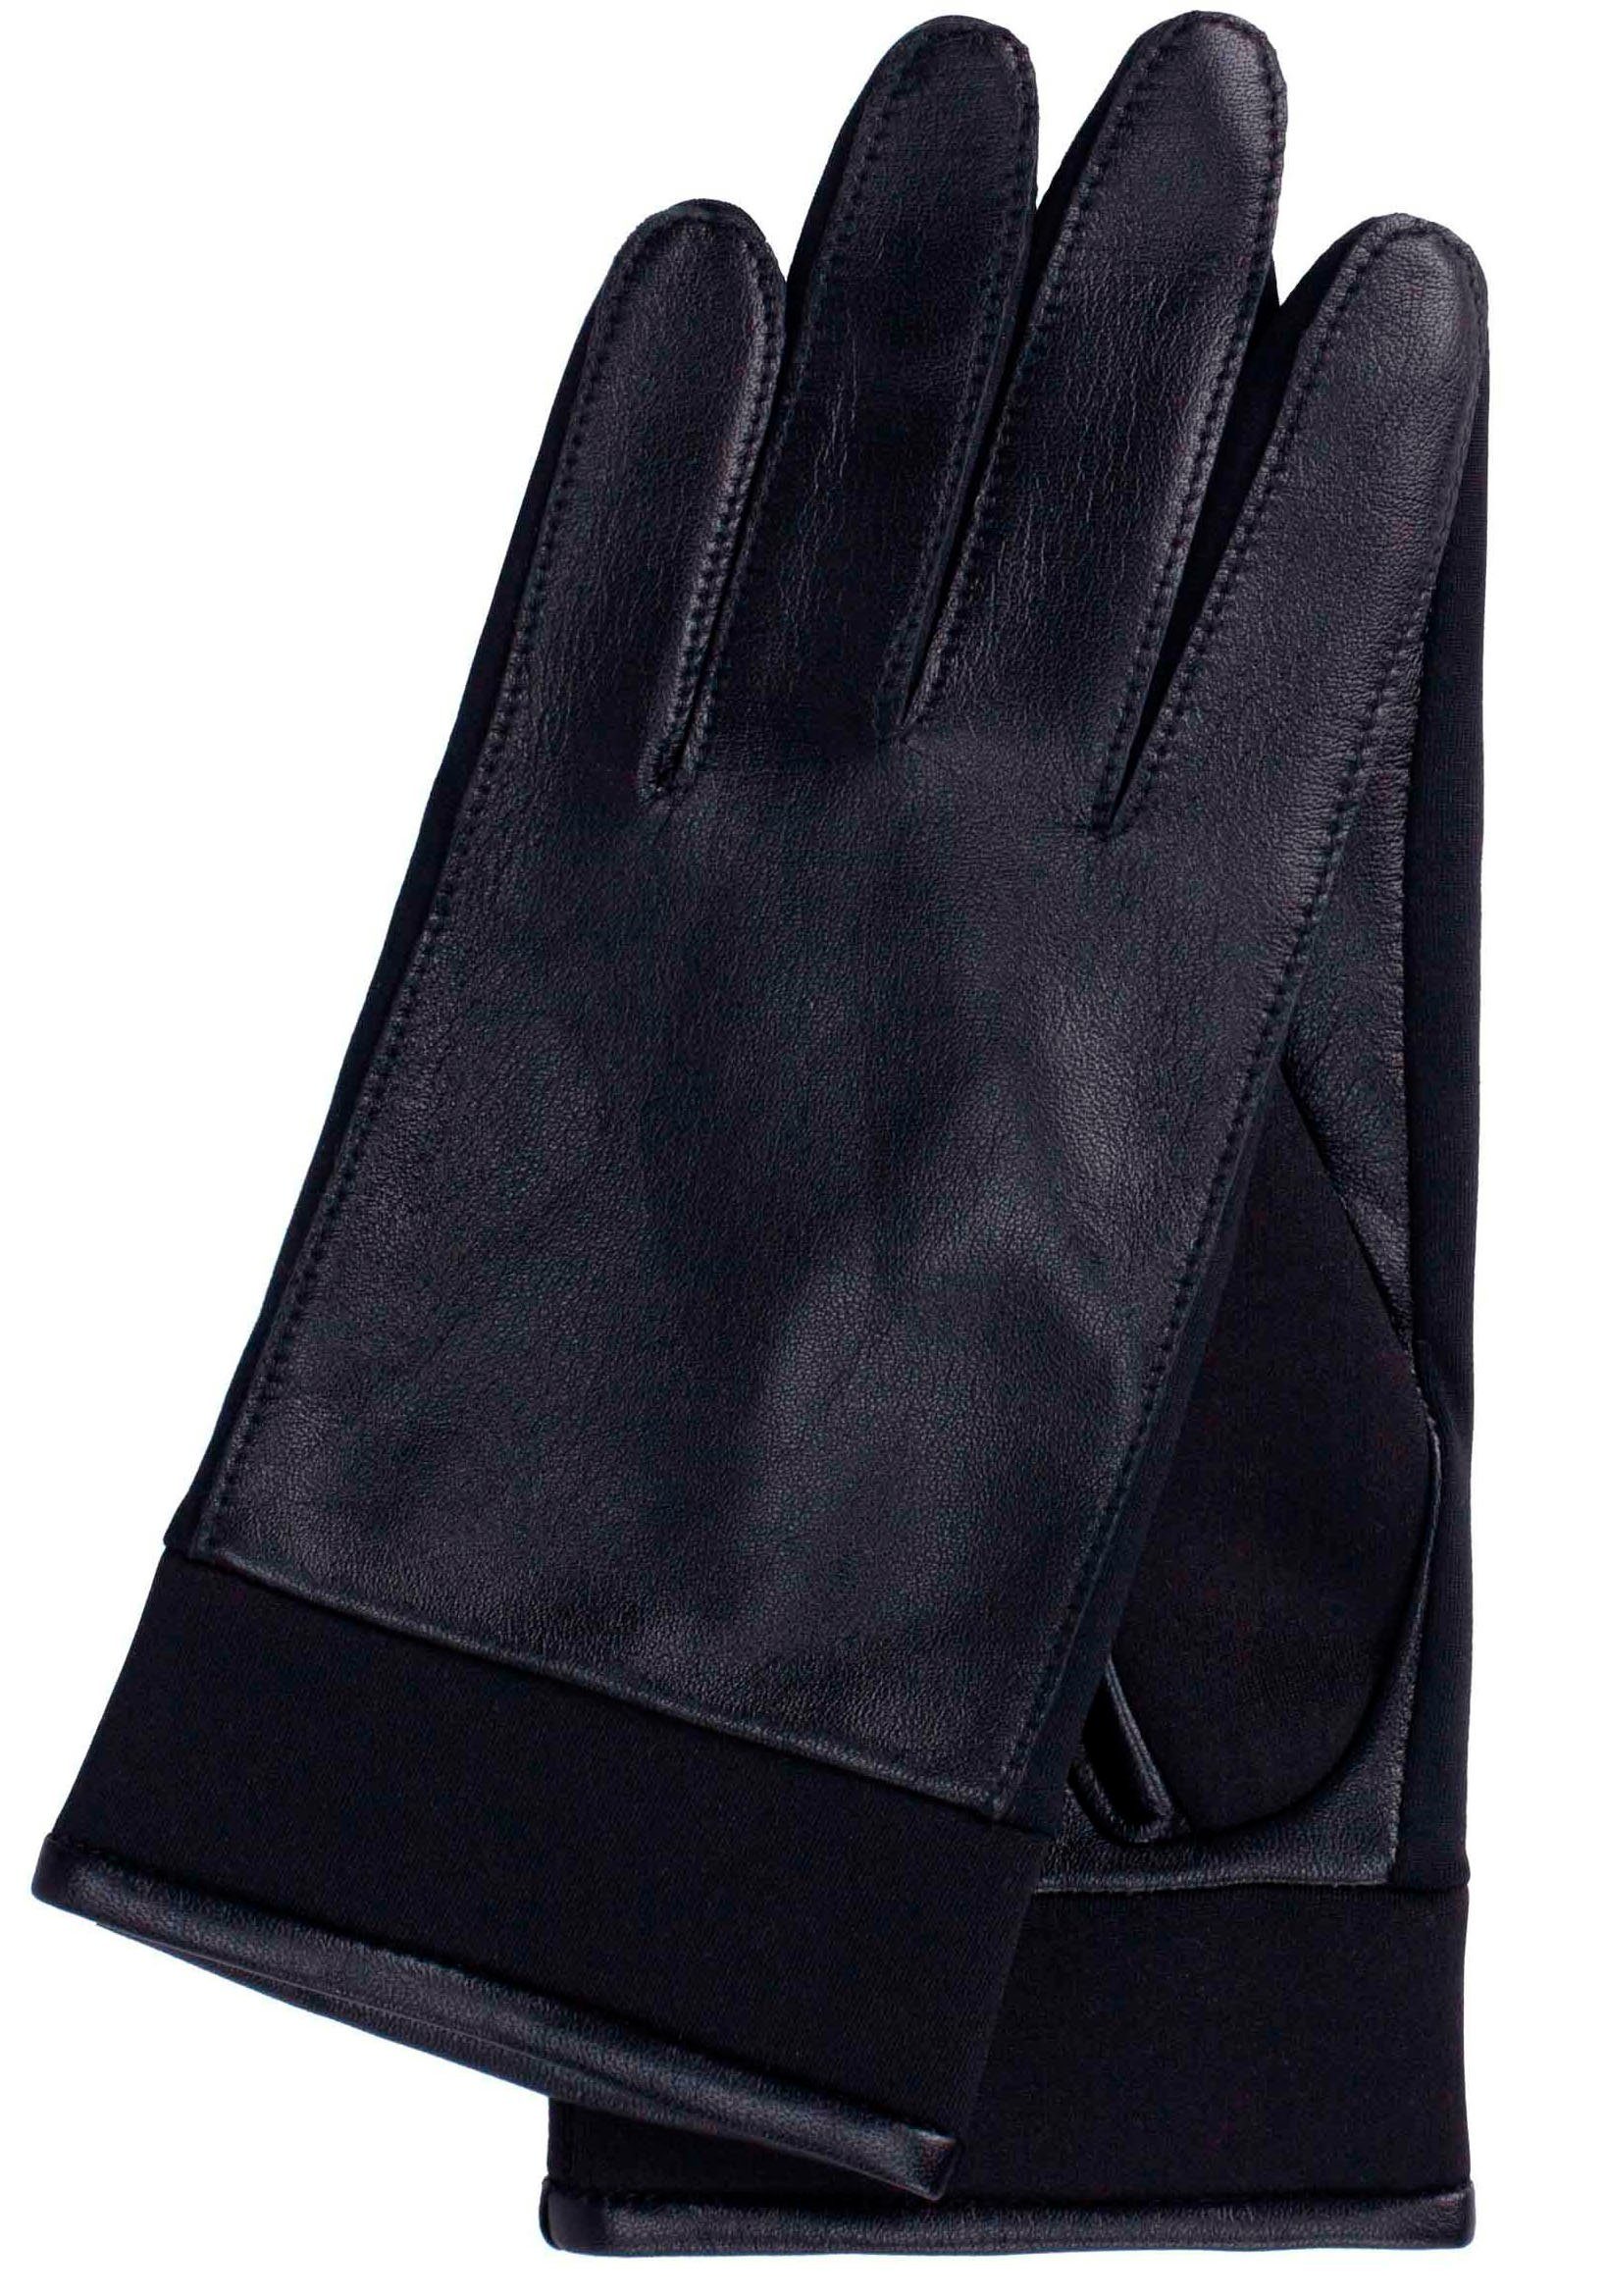 KESSLER Lederhandschuhe Stella Neopreneinsätze black | Handschuhe